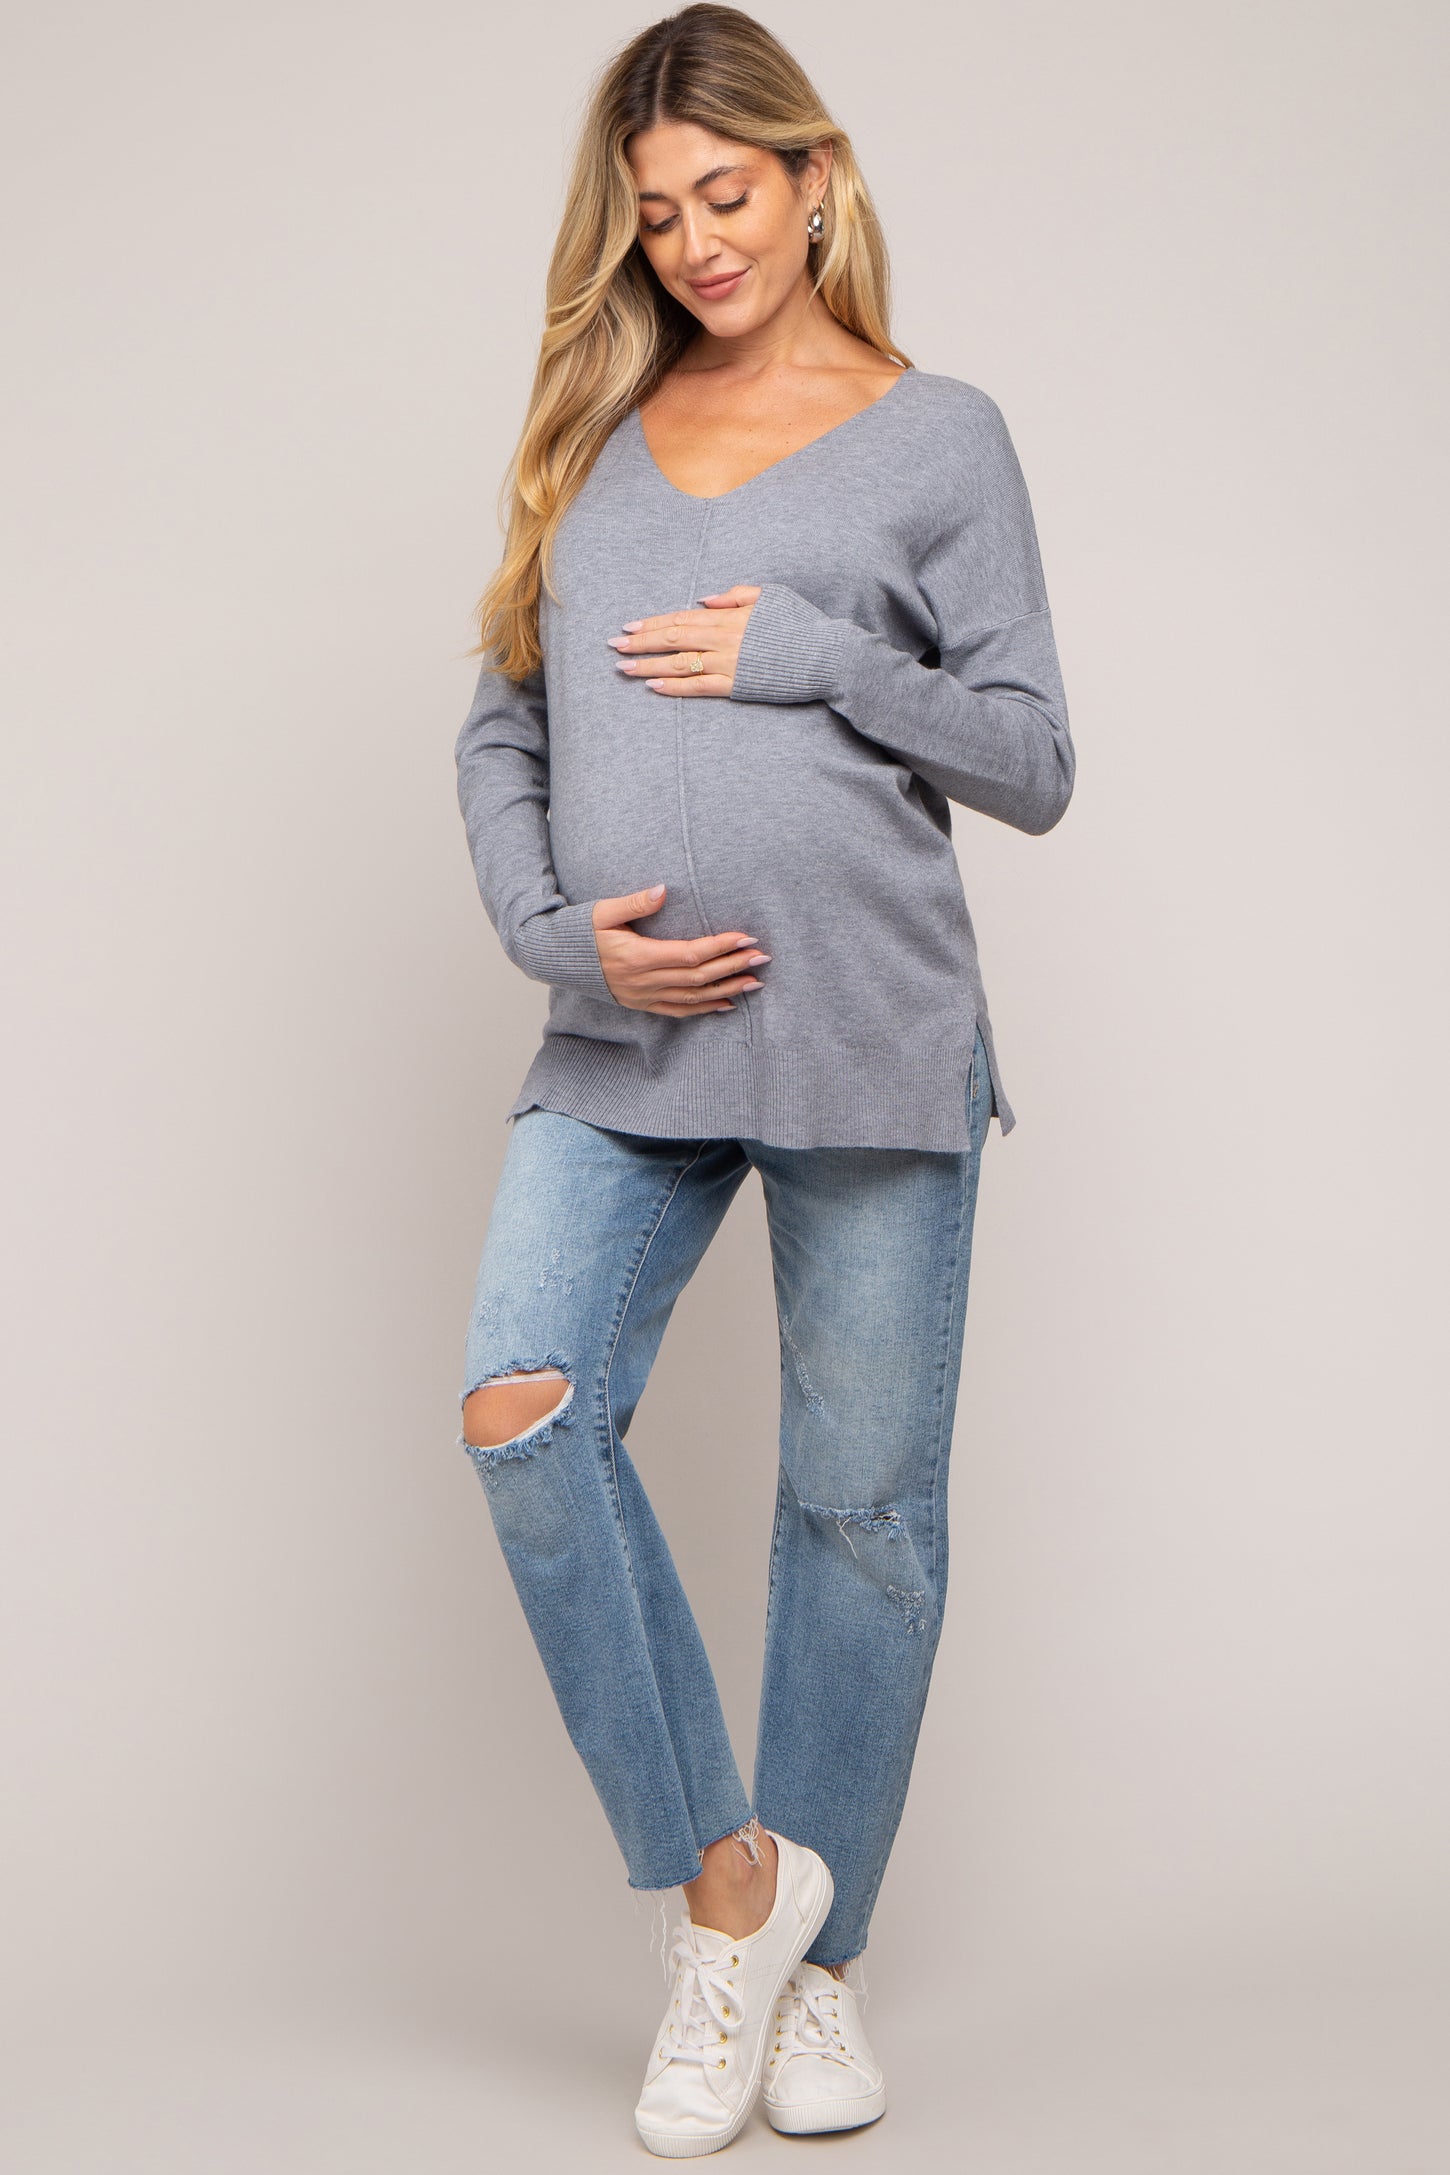 Heather Grey Long Sleeve Side Slit Maternity Sweater